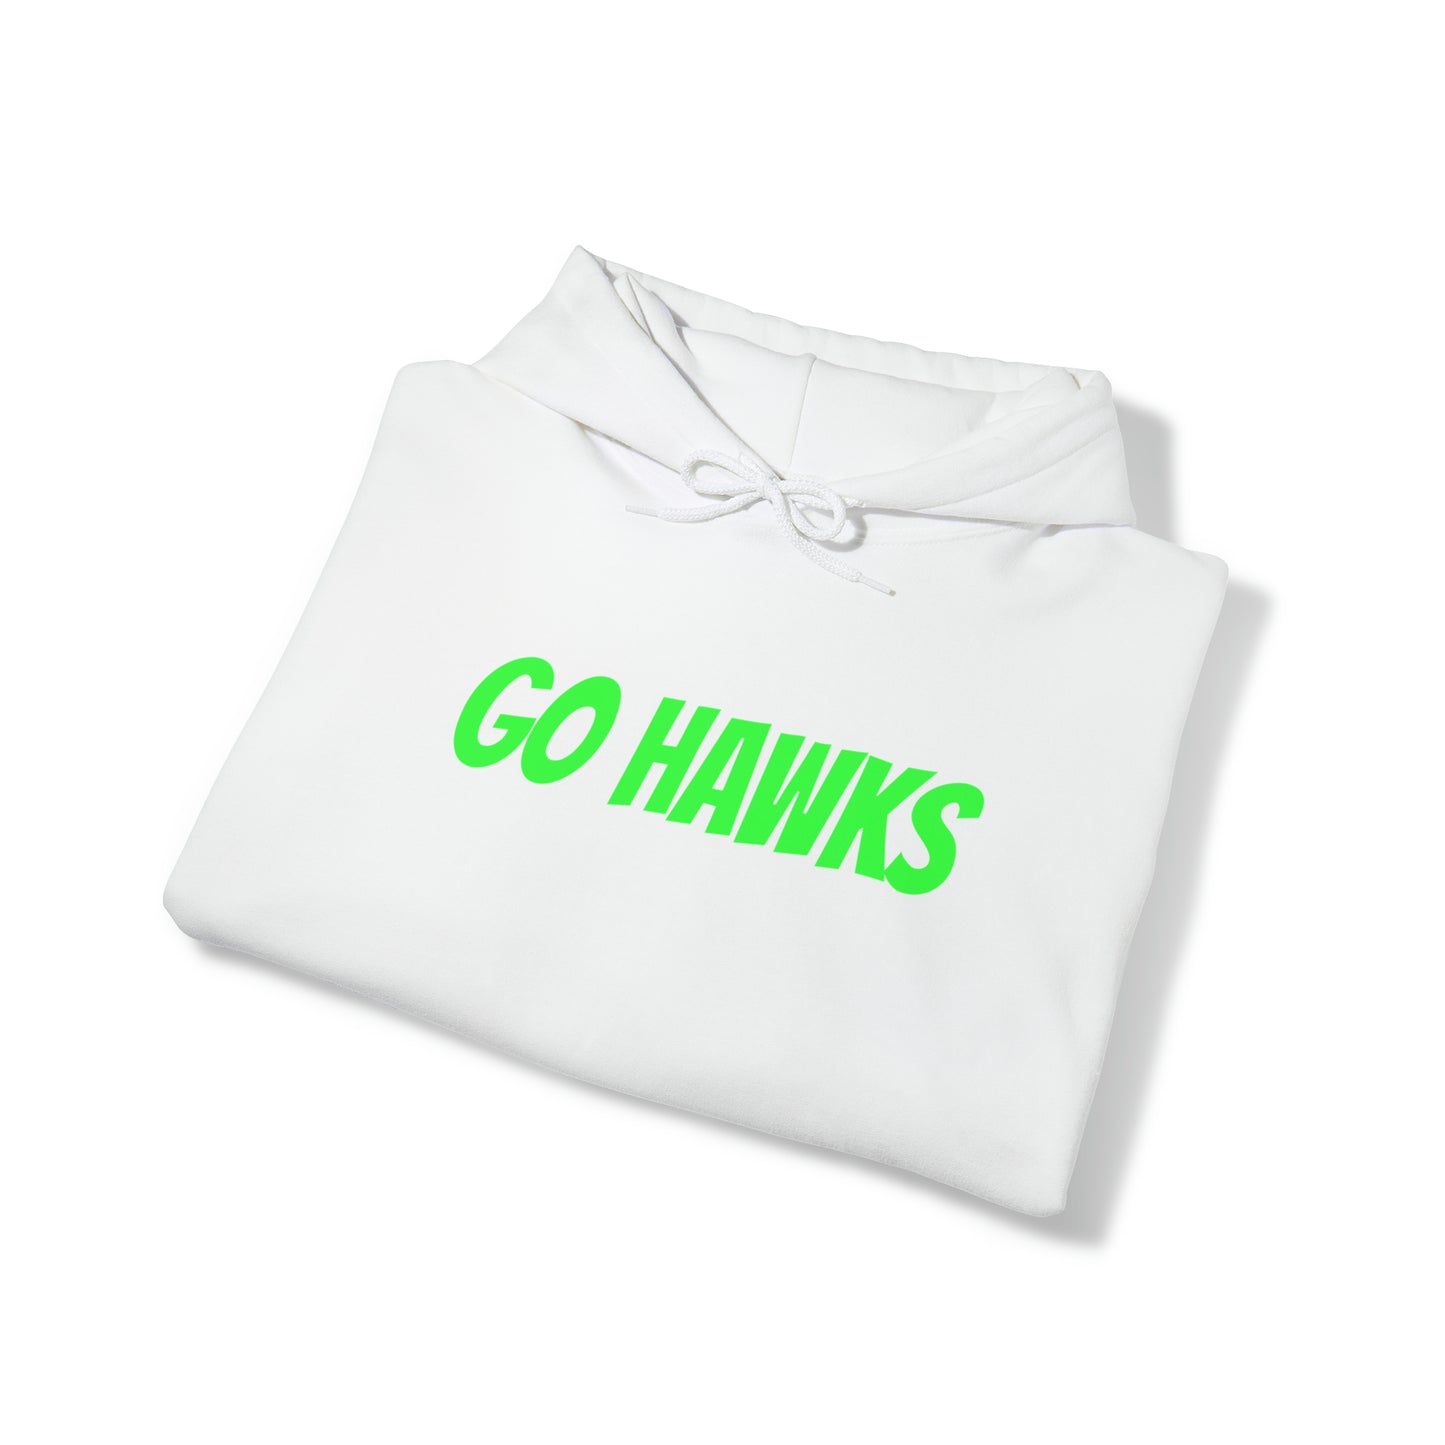 GO HAWKS Unisex Heavy Blend™ Hooded Sweatshirt